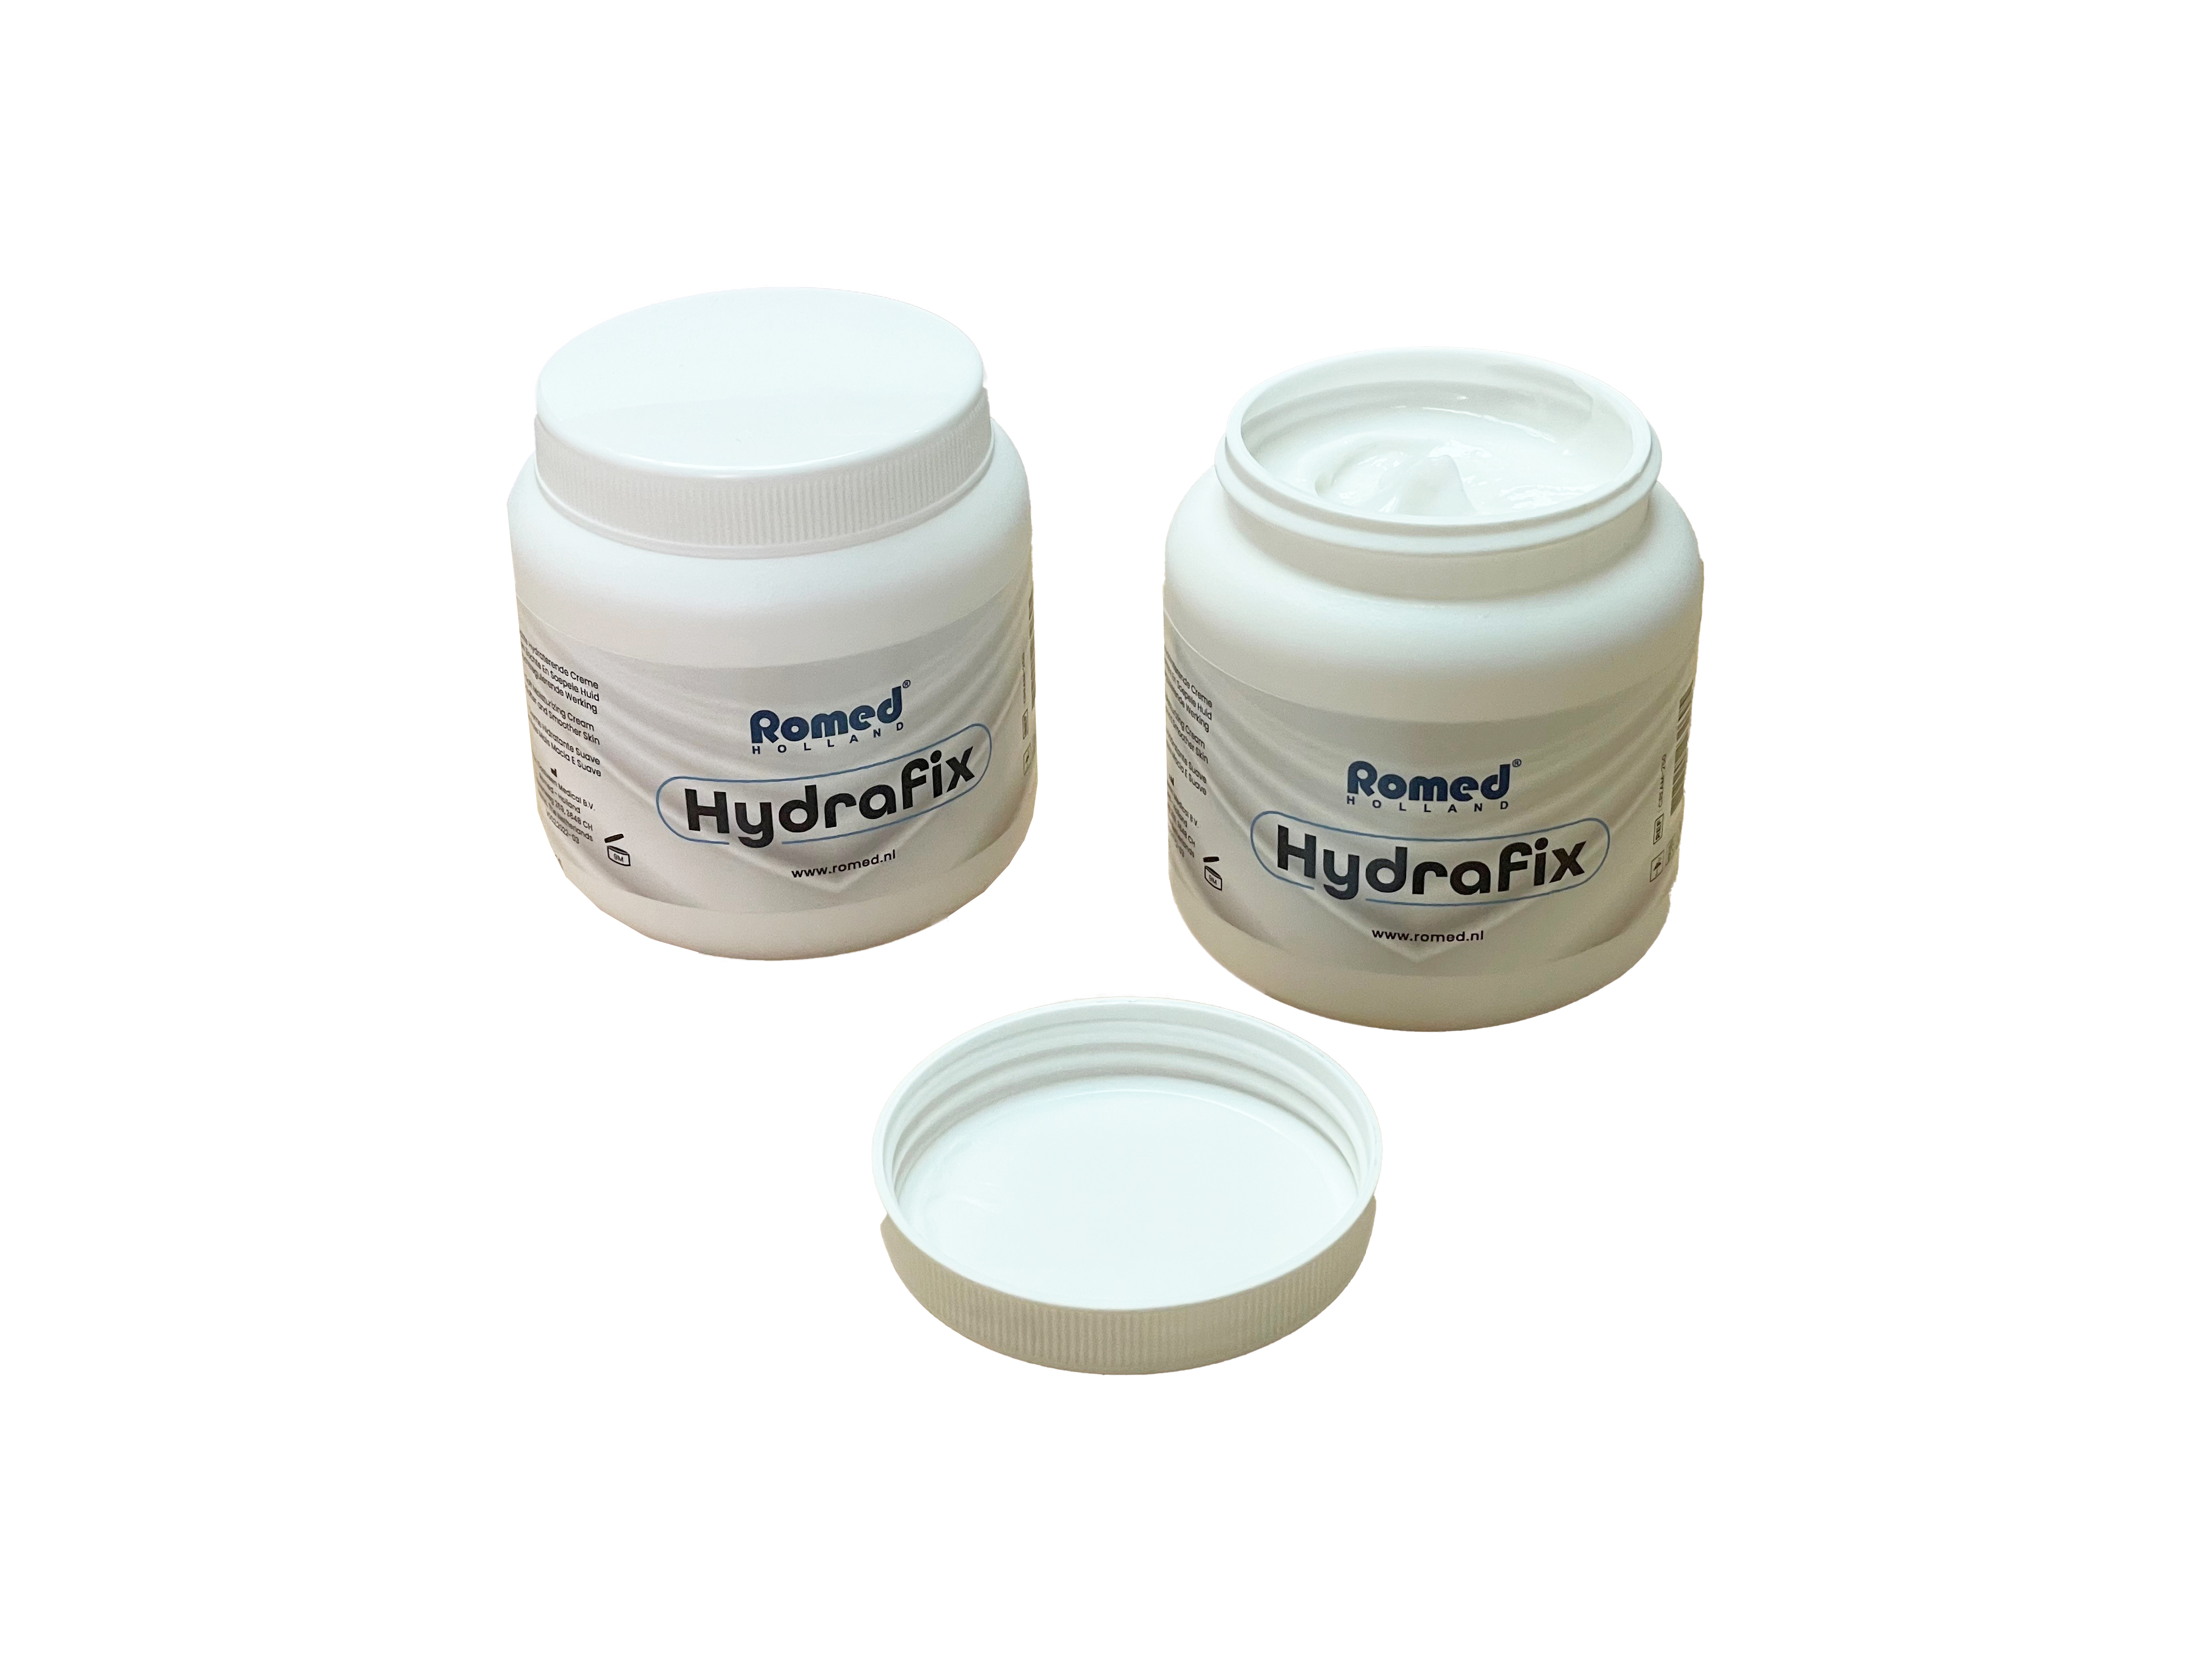 CREAM-250 Creme hidratante macio Romed, Hydrafix, 250 g, 22 un. por caixa de envio.